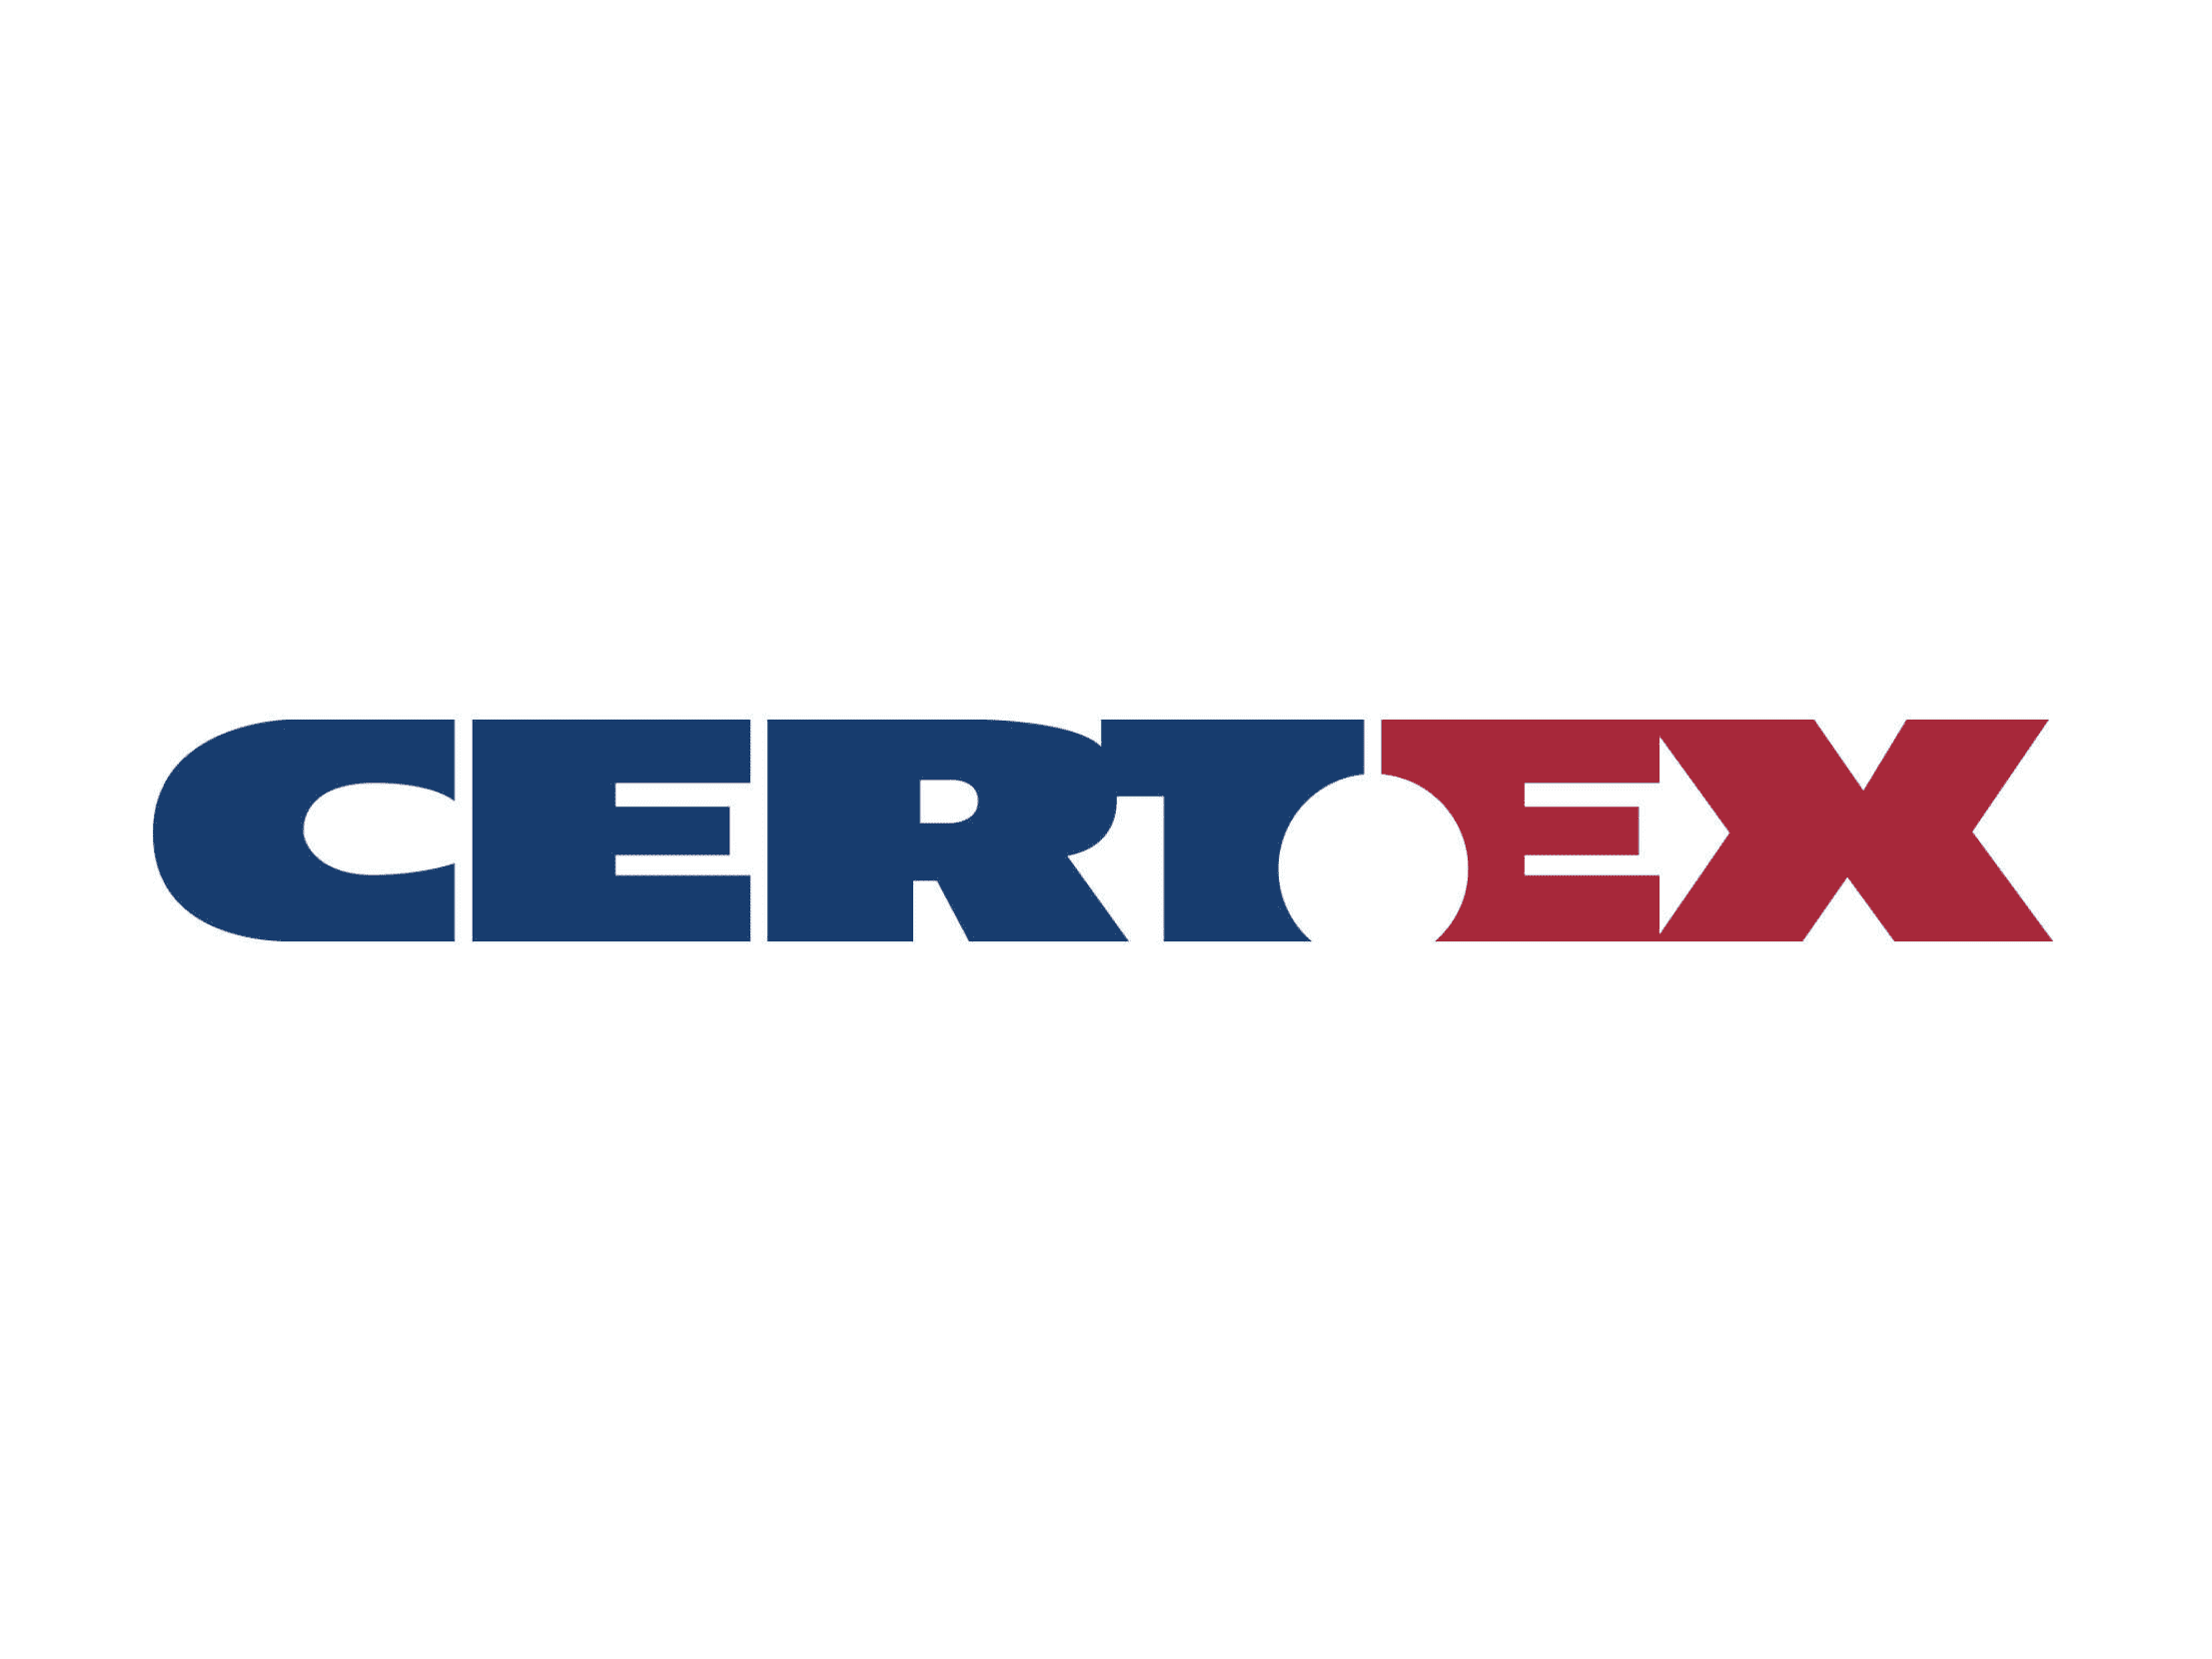 Certex Logo